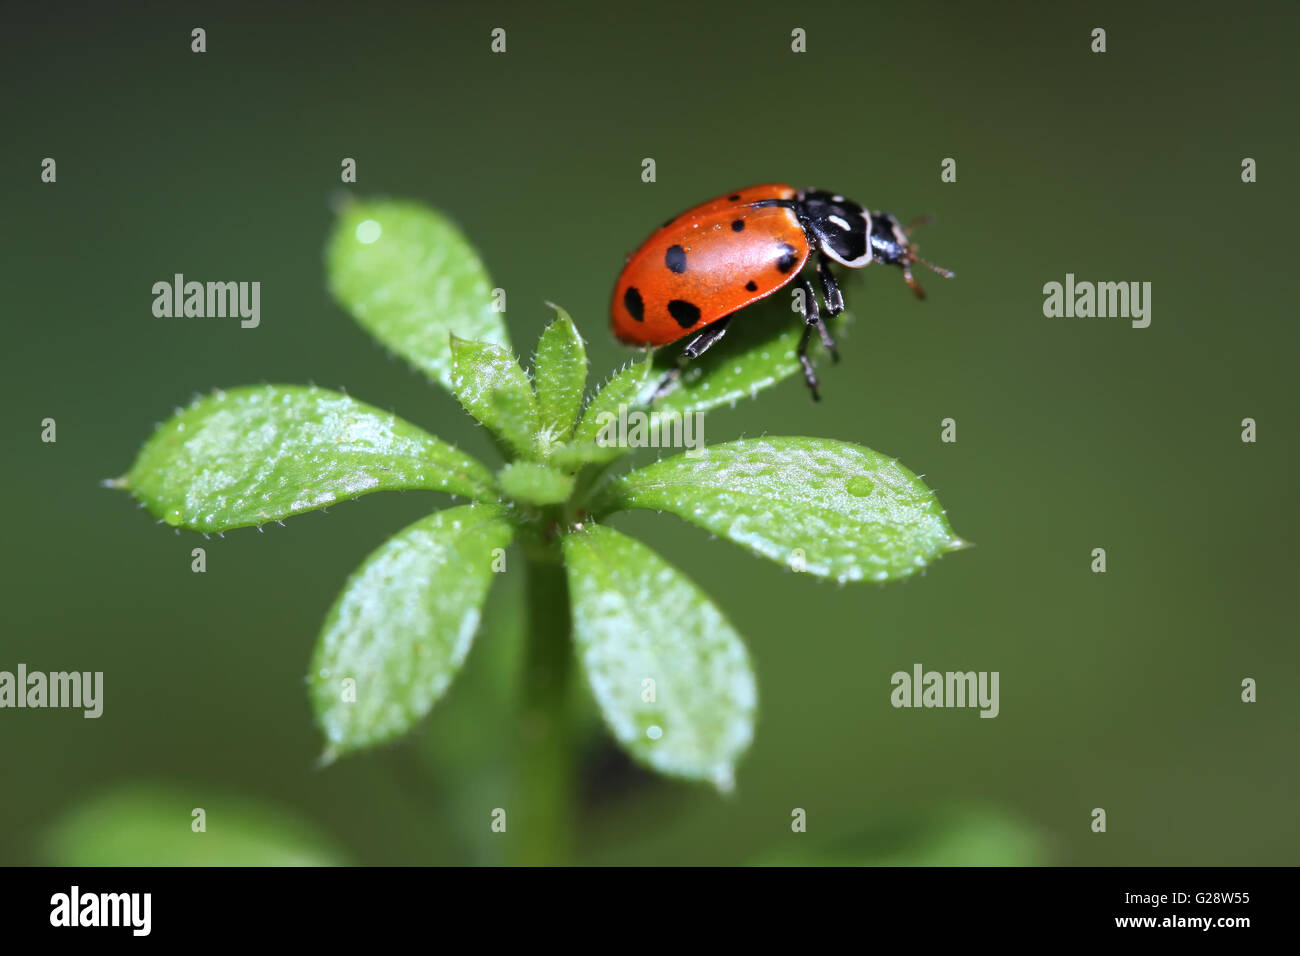 Ladybug crawling on plant near a local stream. Stock Photo